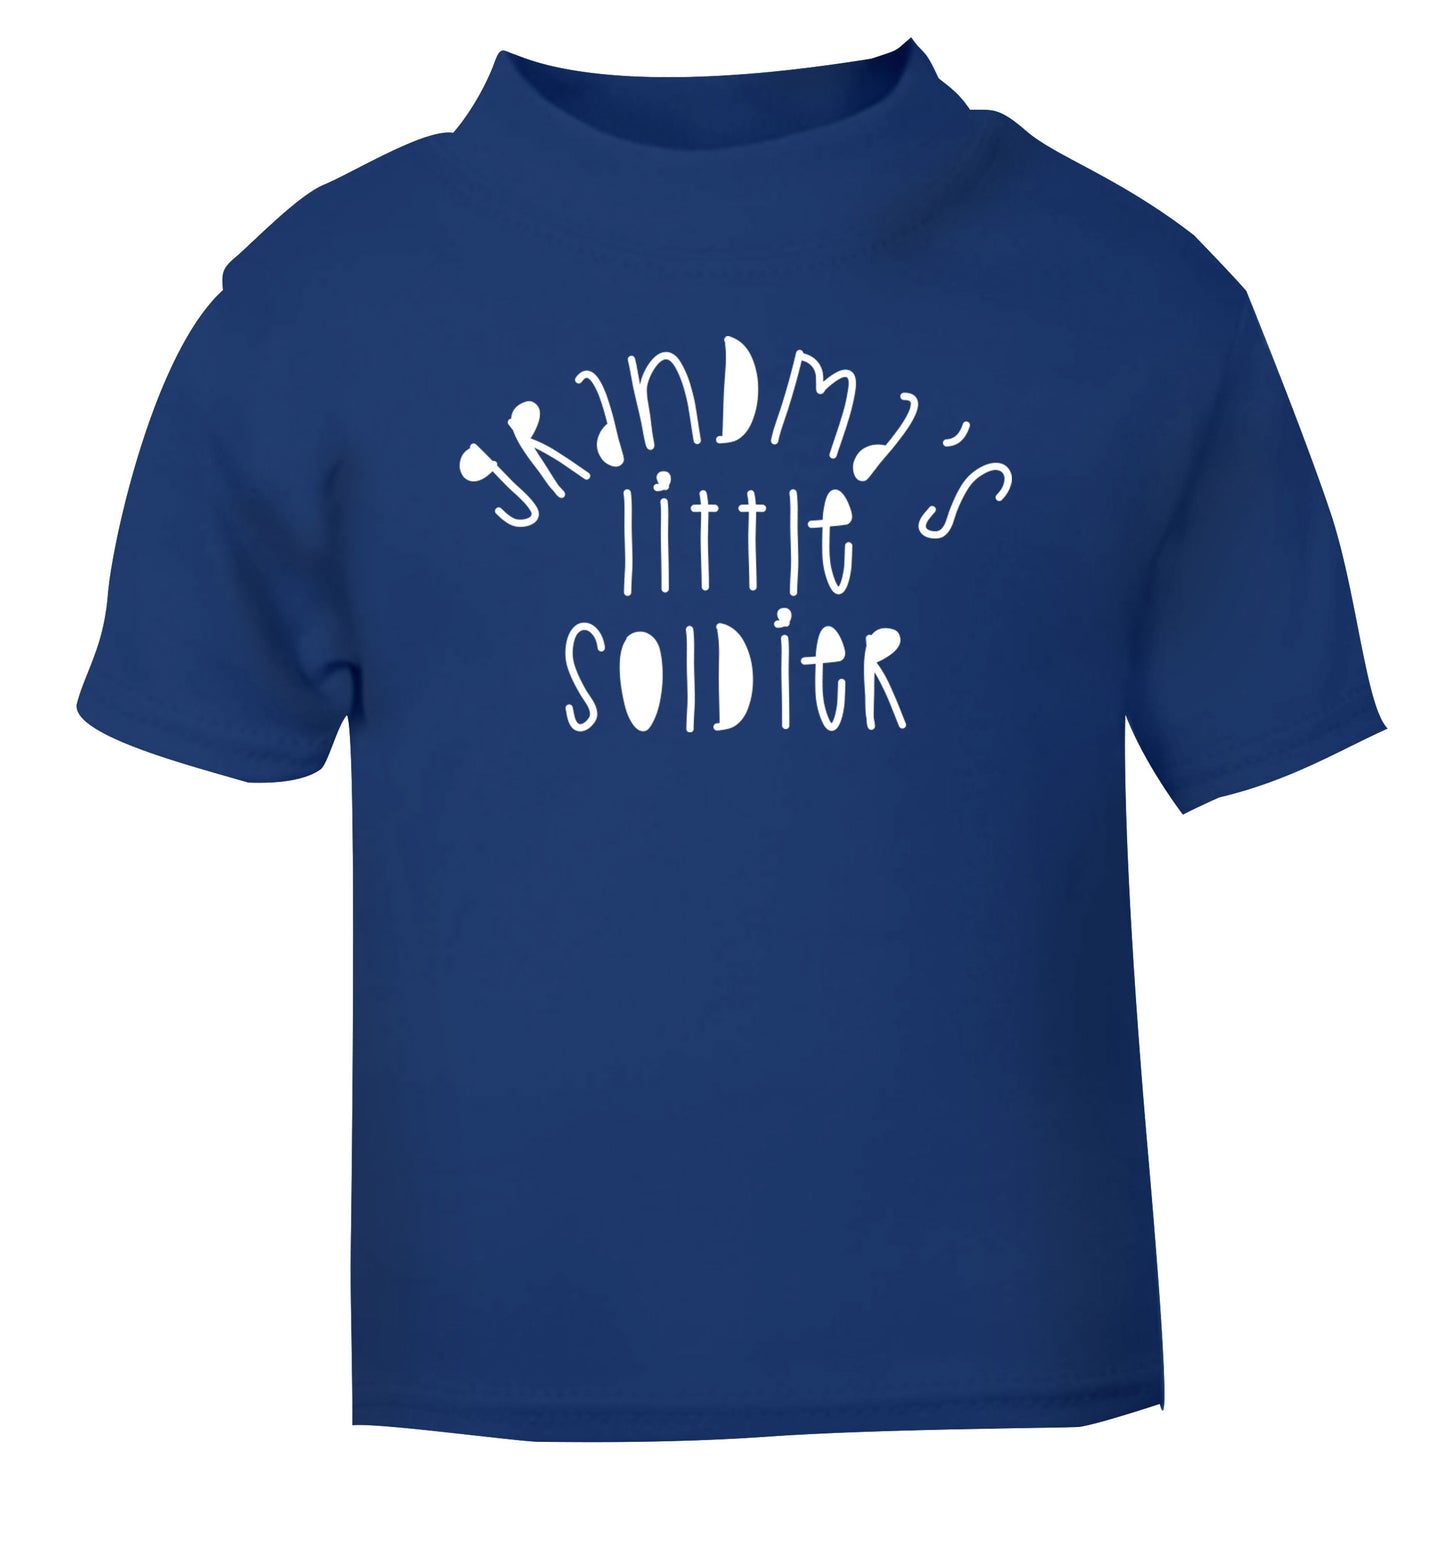 Grandma's little soldier blue Baby Toddler Tshirt 2 Years